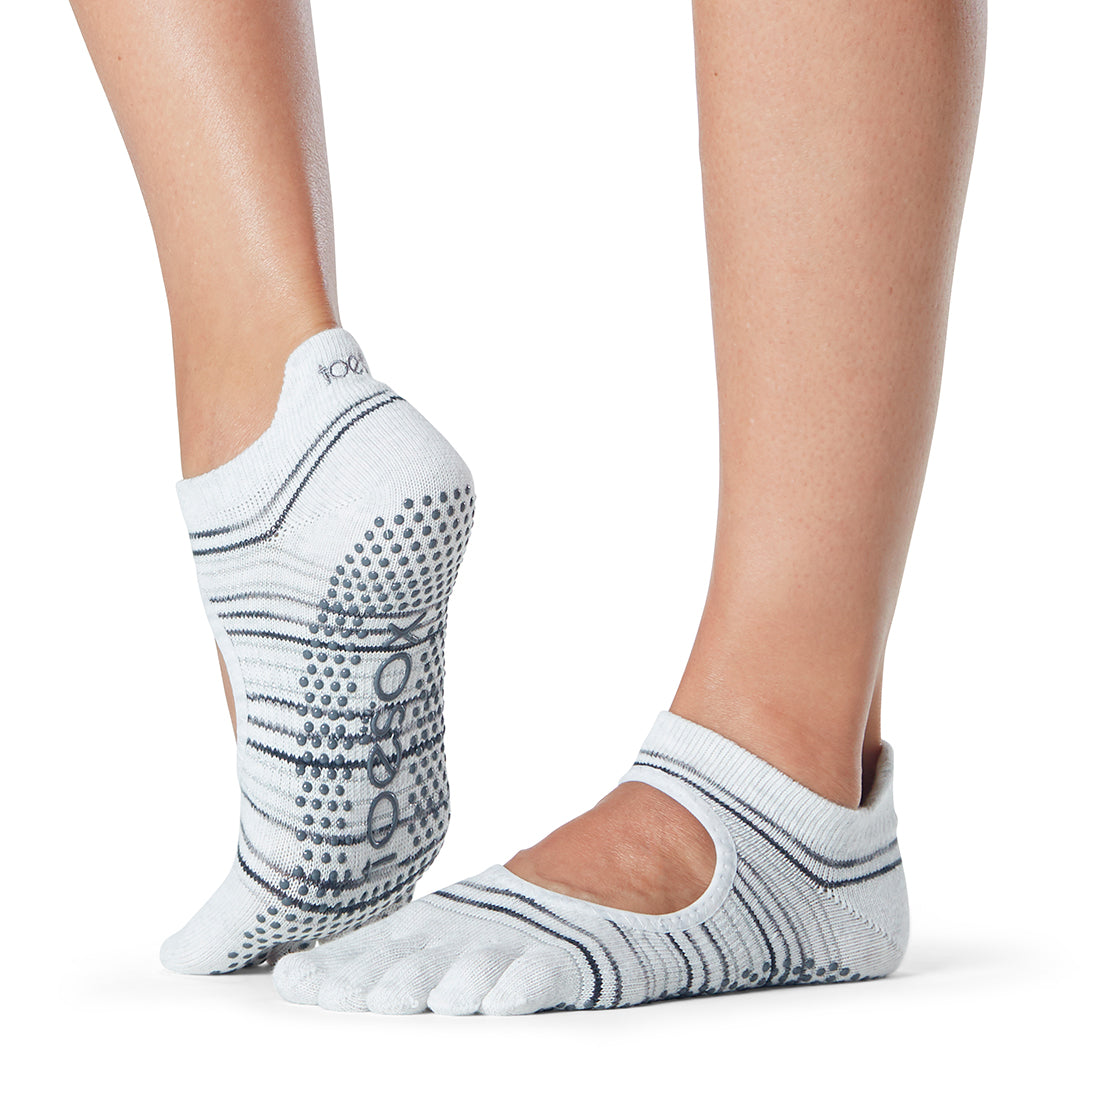 ToeSox - Bellarina Grip Socks - FALL COLLECTION 2020 - T8 Fitness